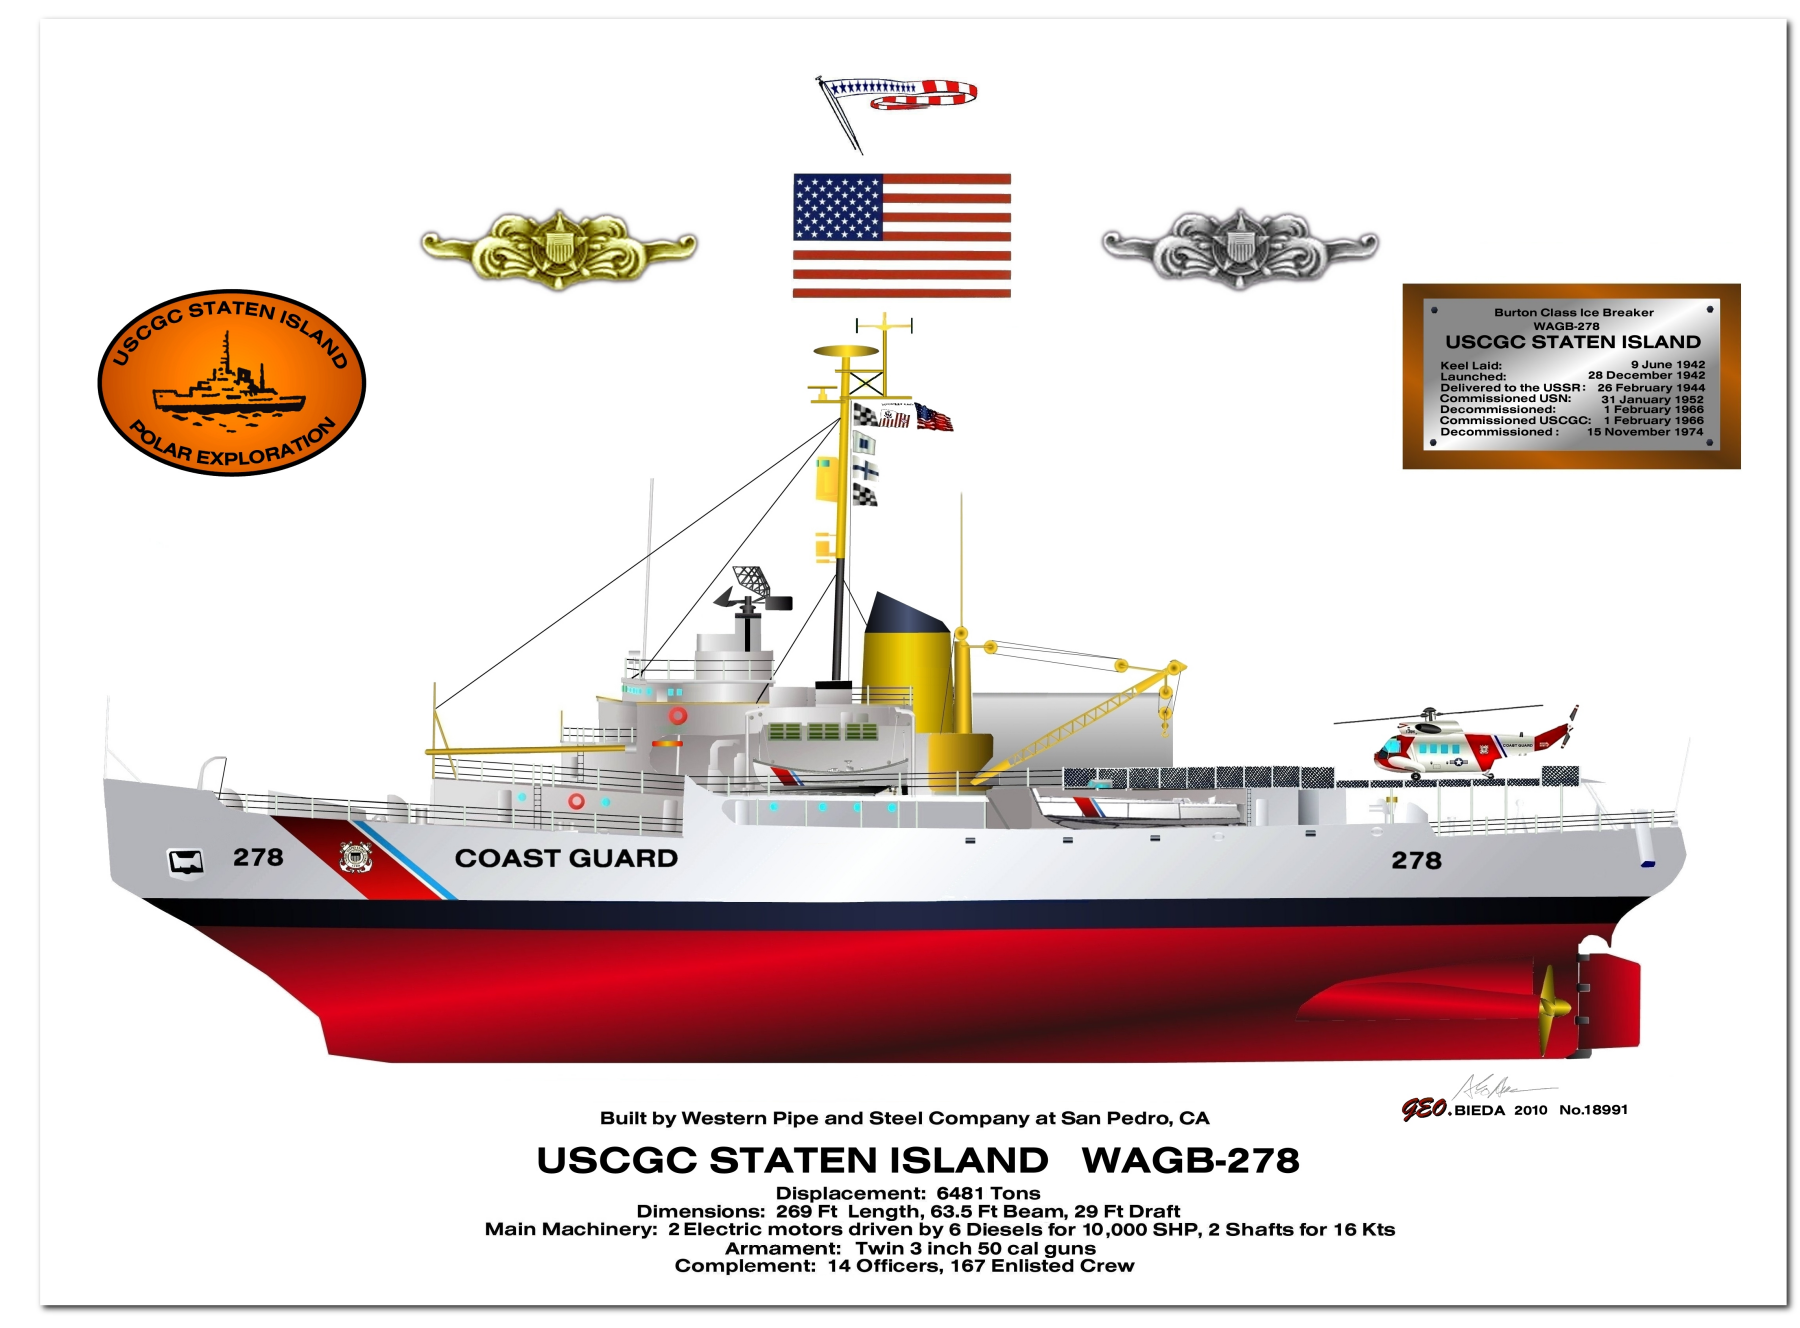 USCGC Staten Island WAGB 278, a Burton Class Icebreaker